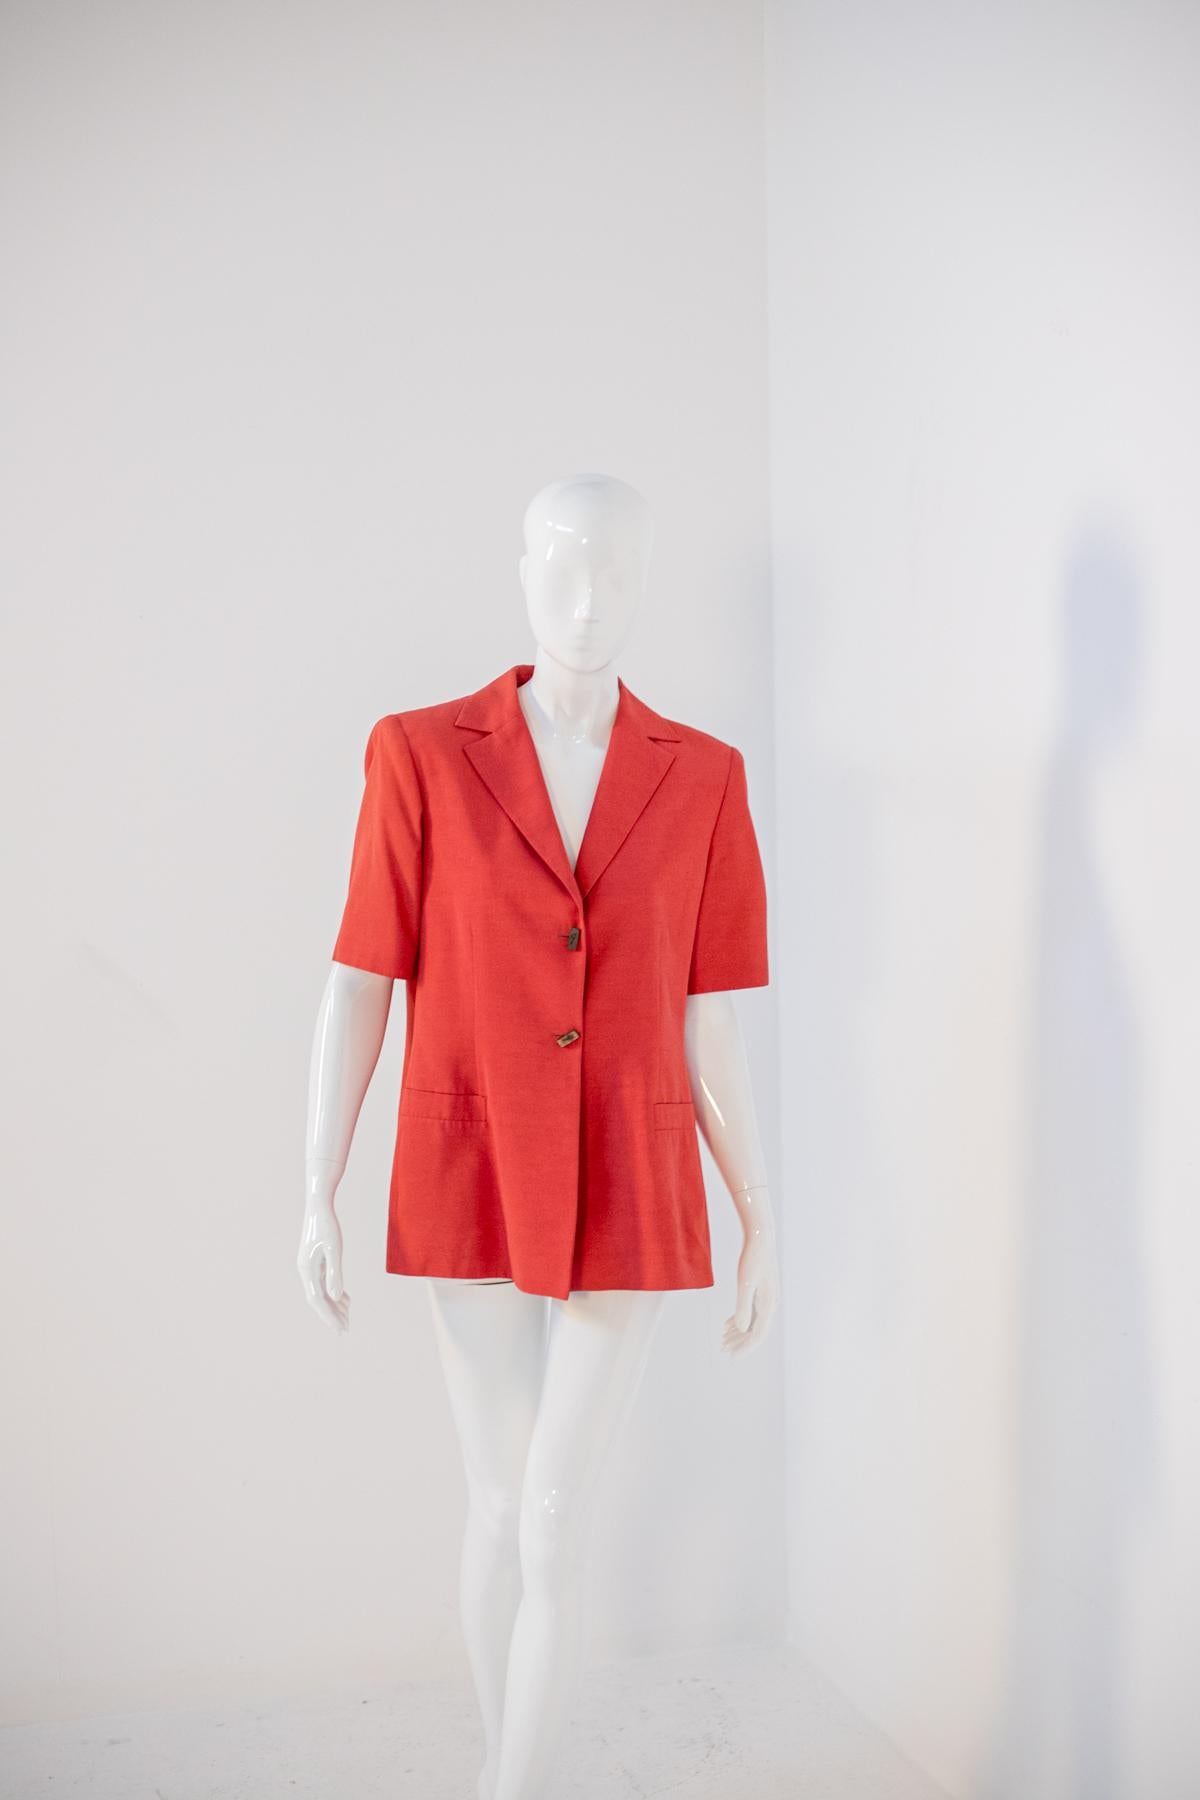 Gattinoni Stylish Vintage Red Blazer For Sale 2